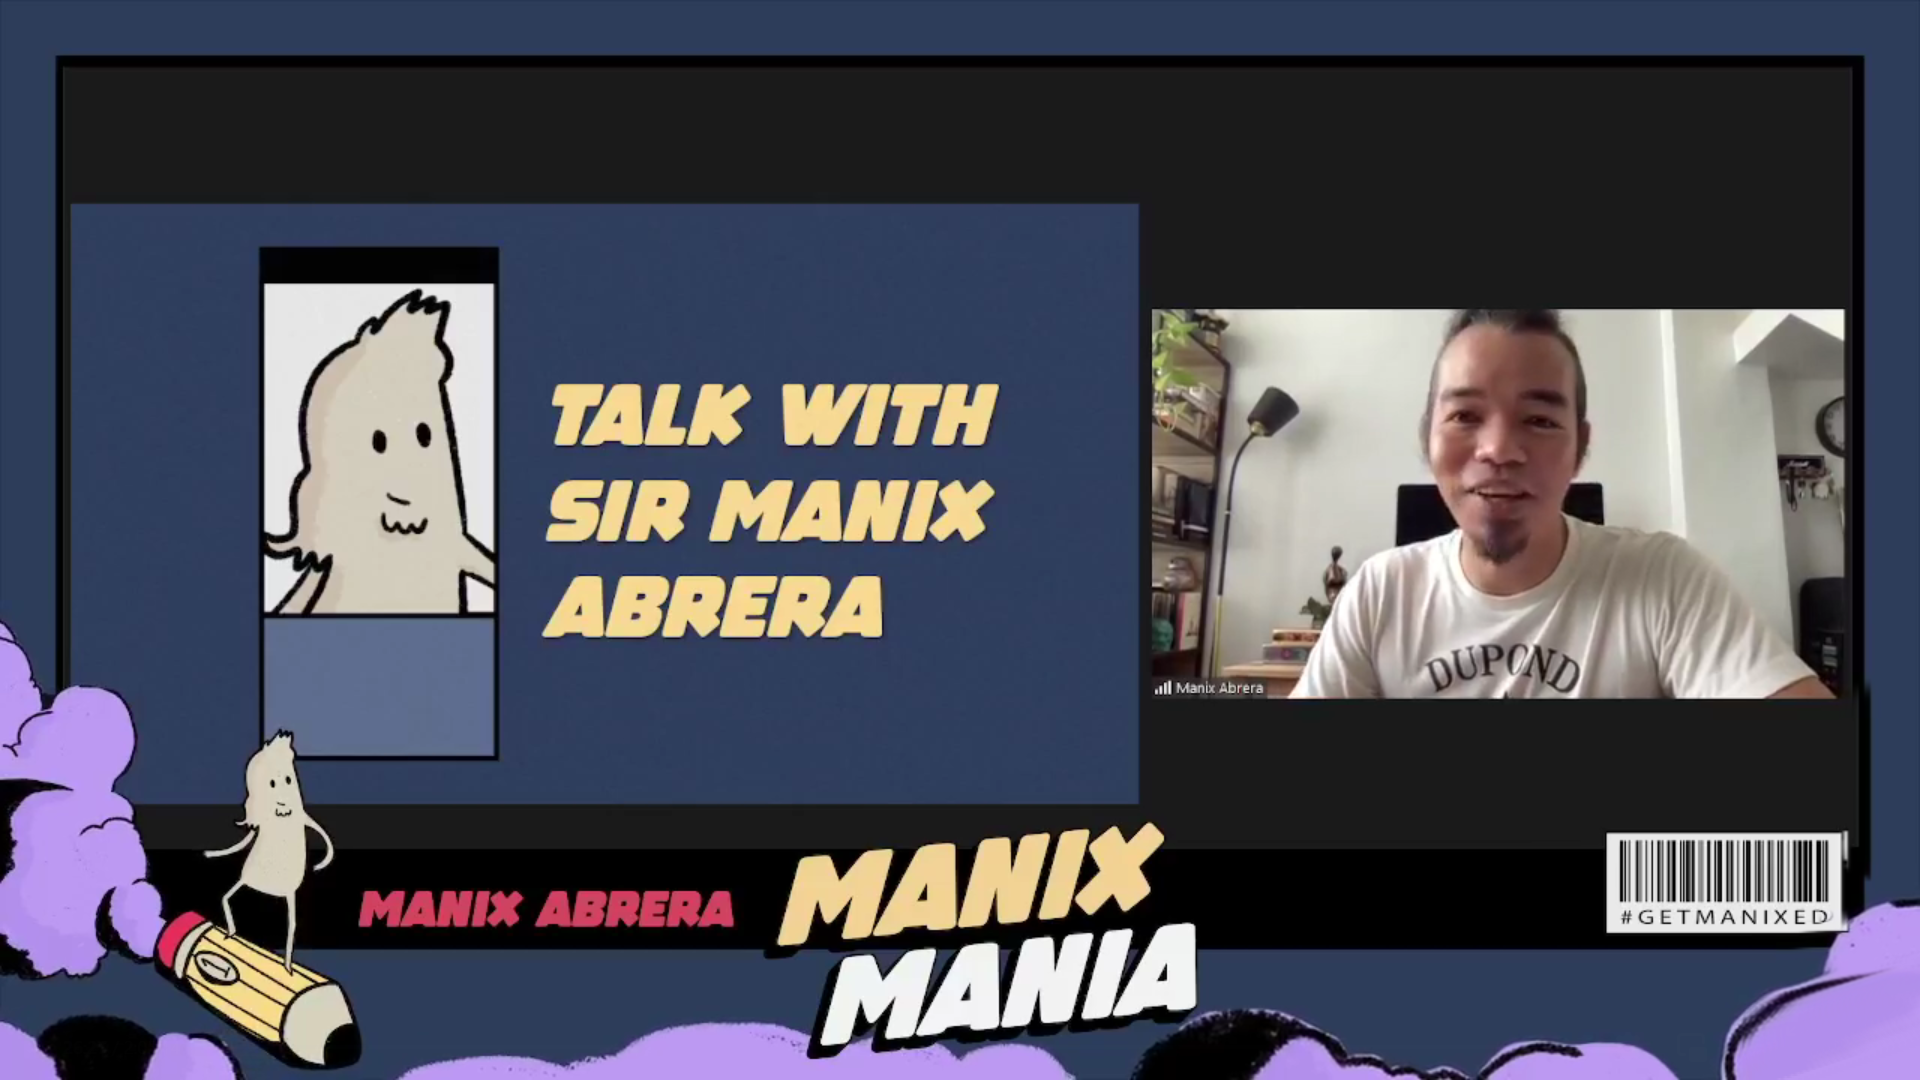 Screenshot From Manix Mania Event